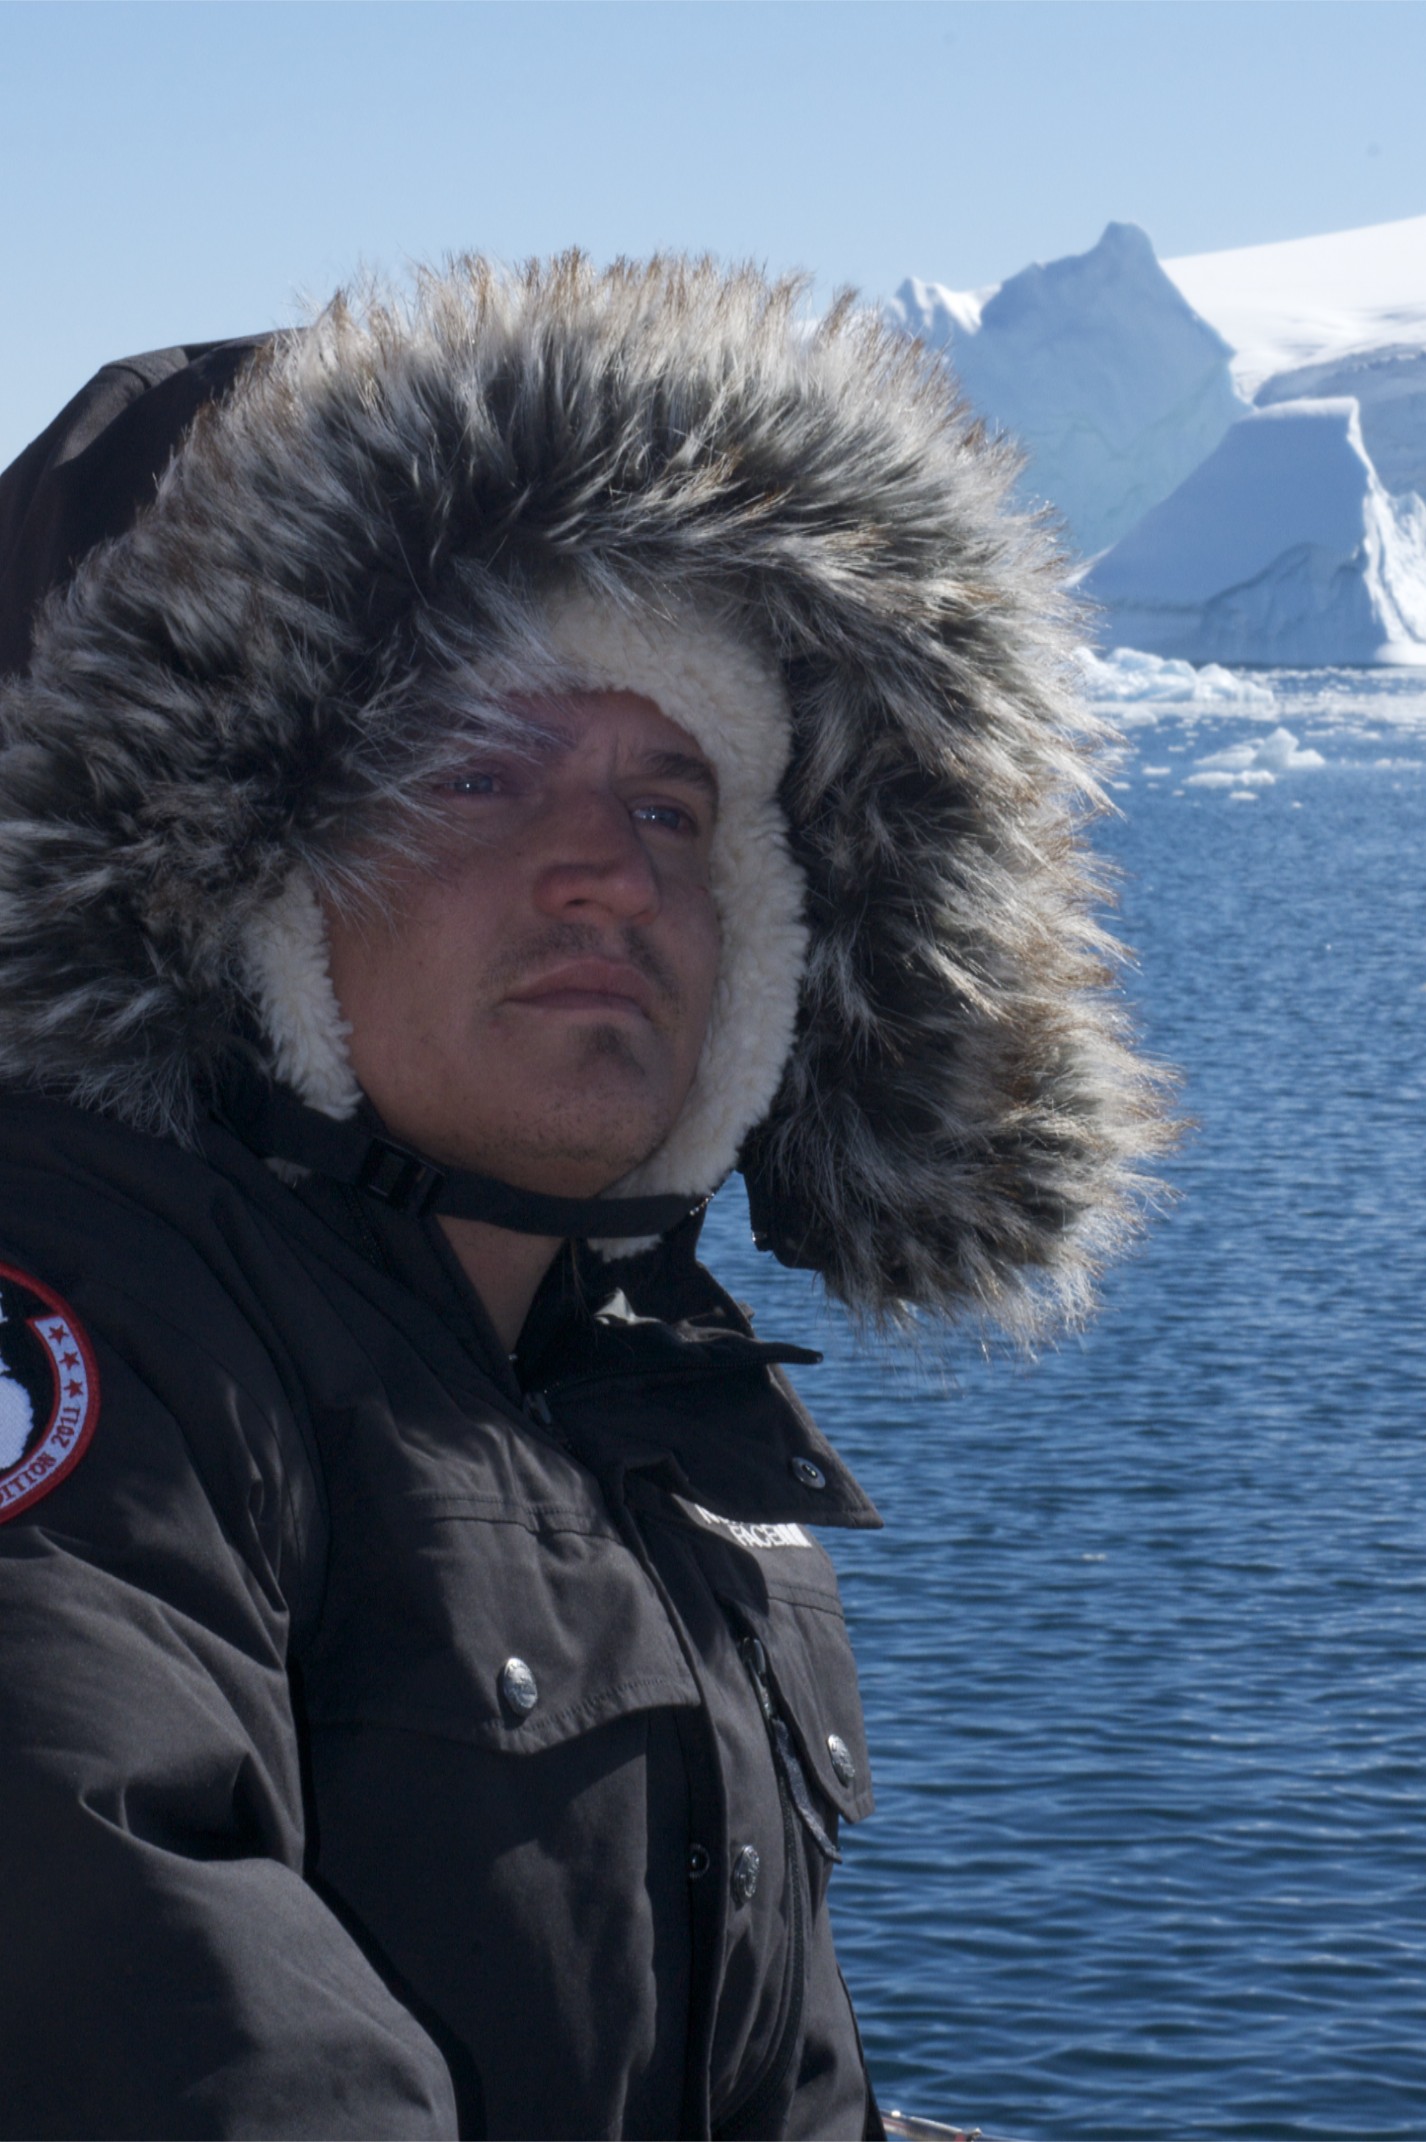 Episodic Documentary shot in Antarctica - 2010